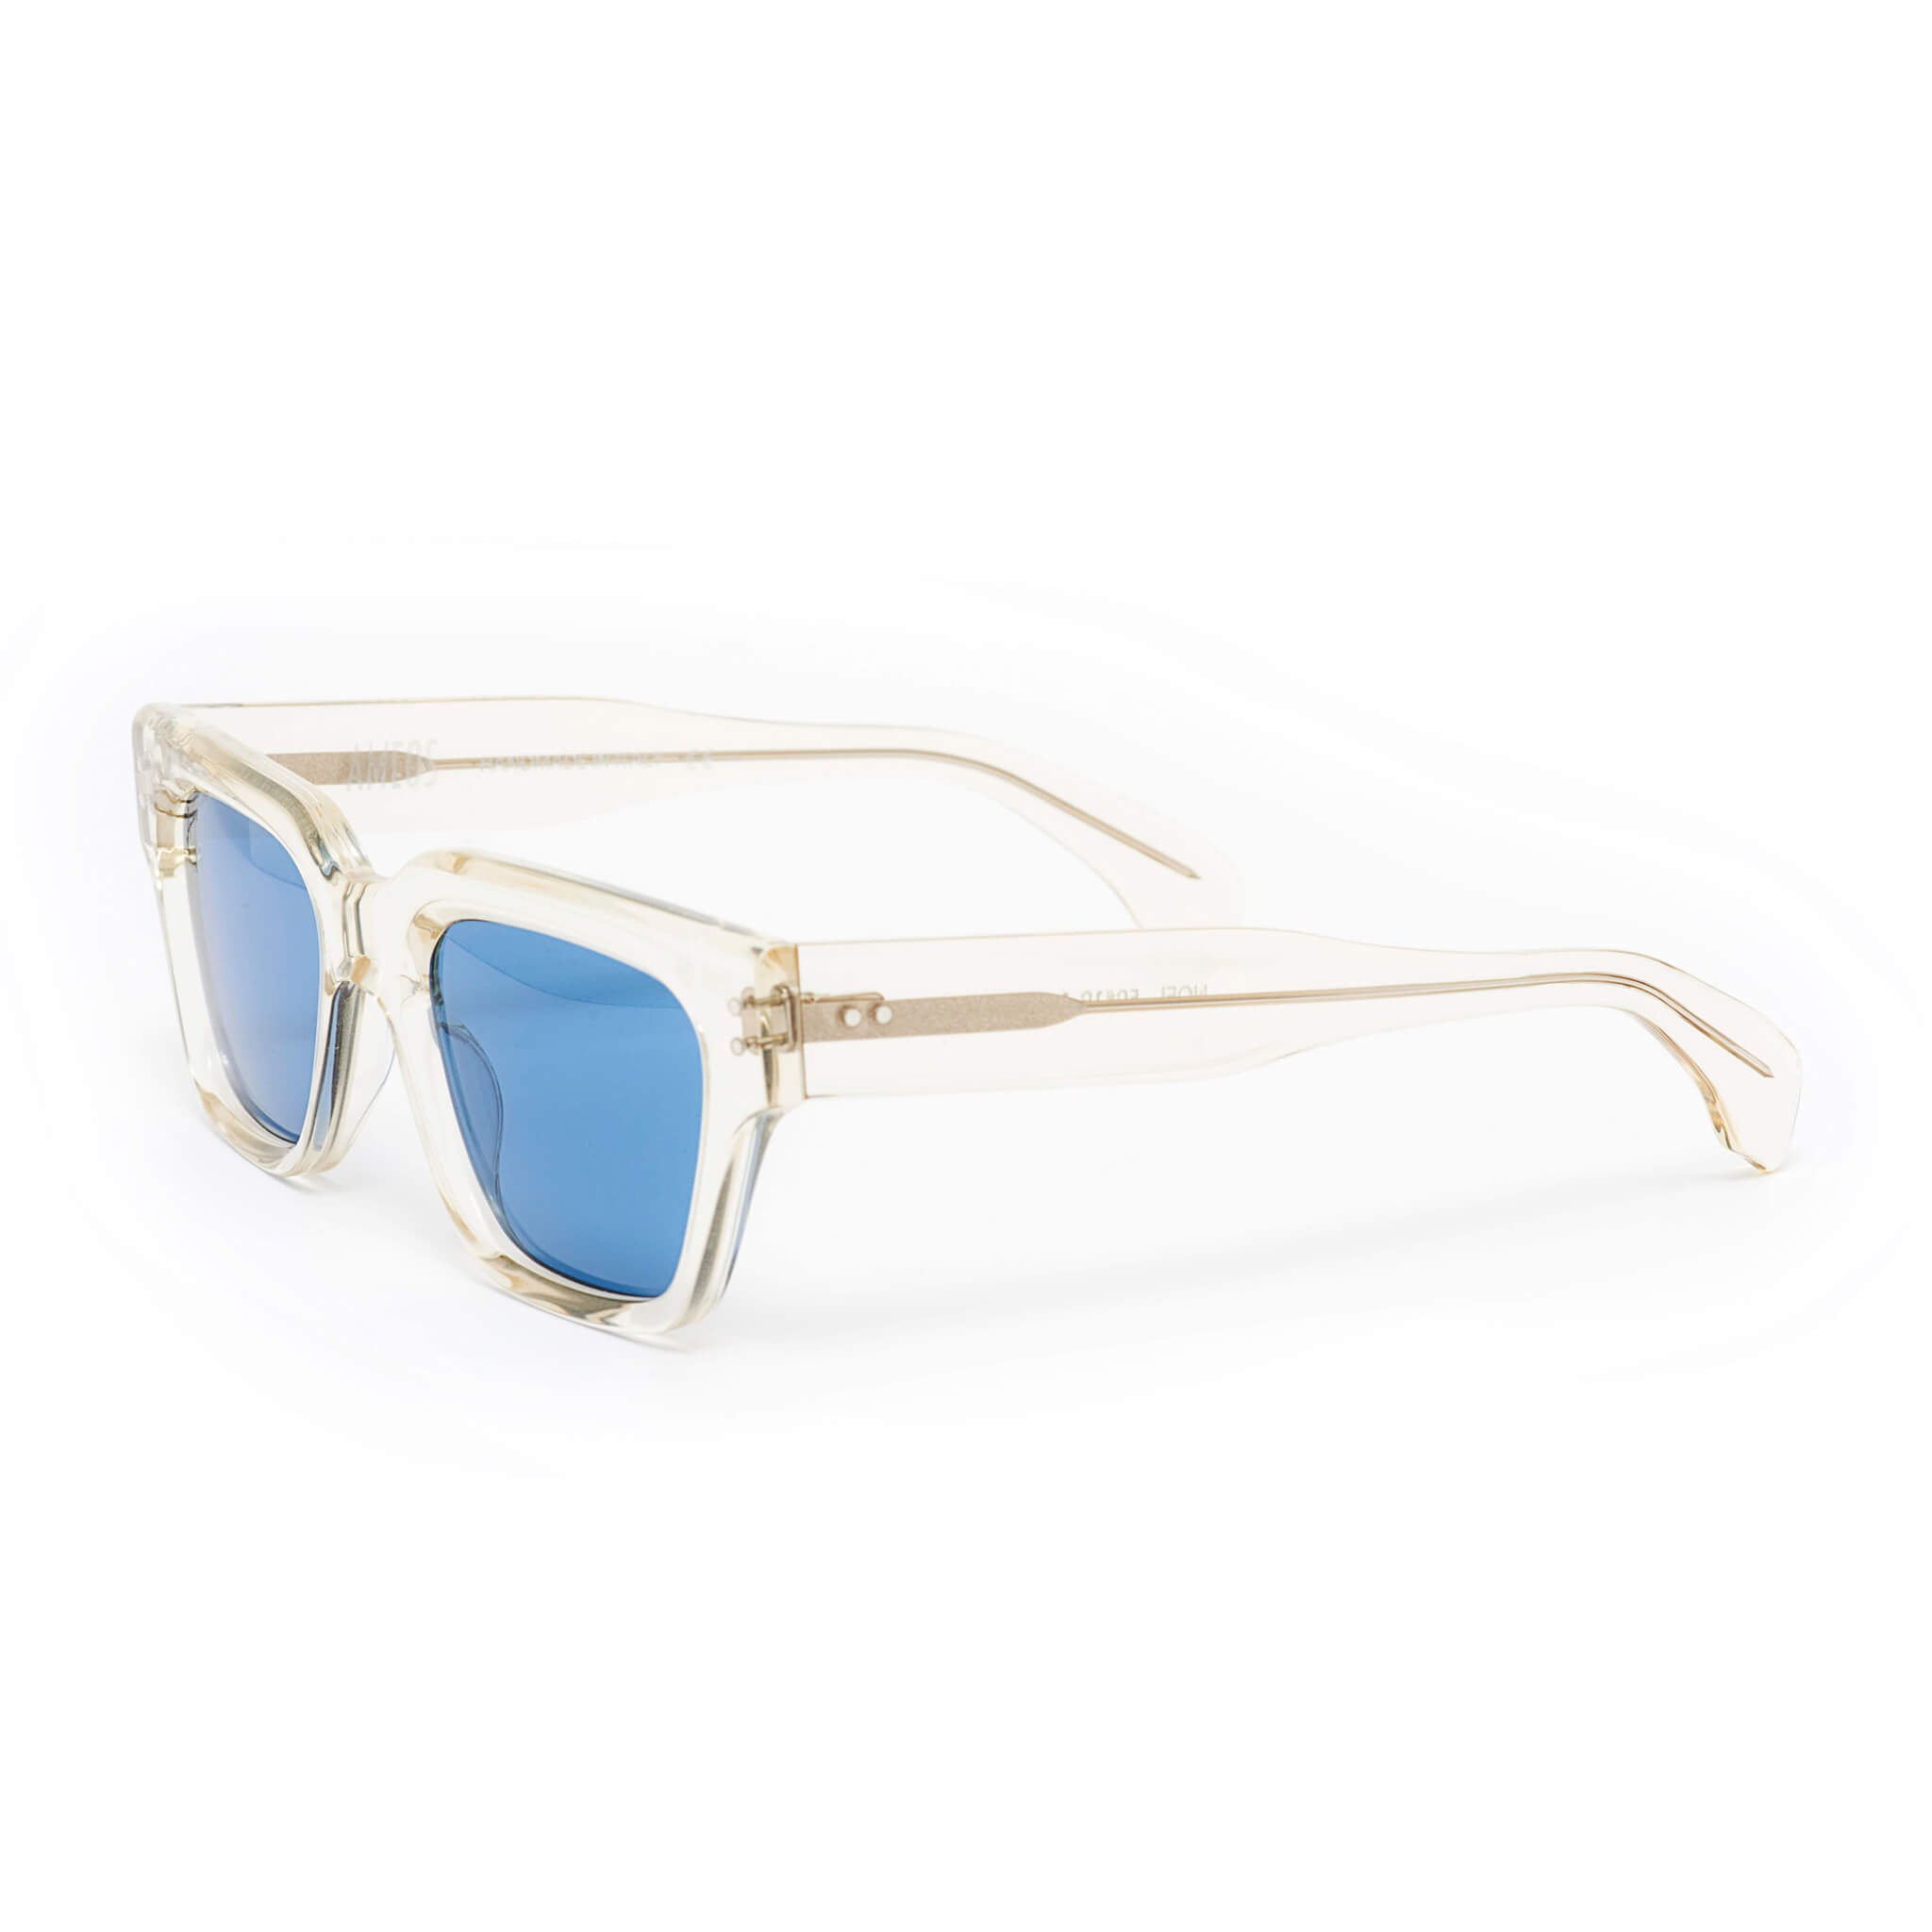 Transparent frames sunglasses with blue lenses